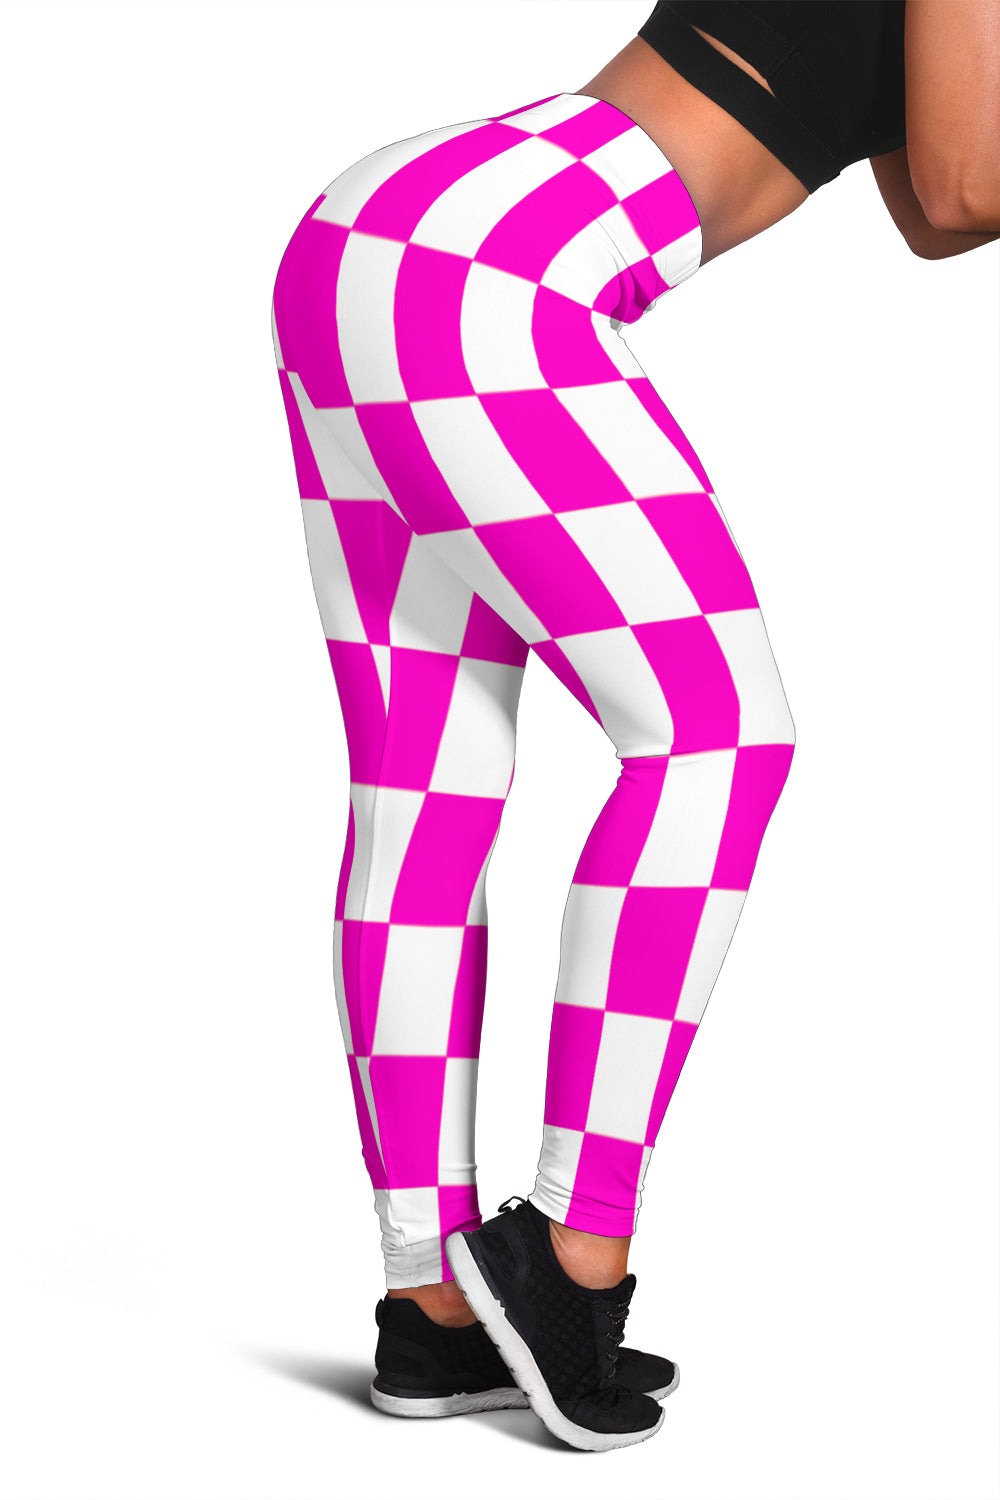 Racing Pink Checkered Leggings